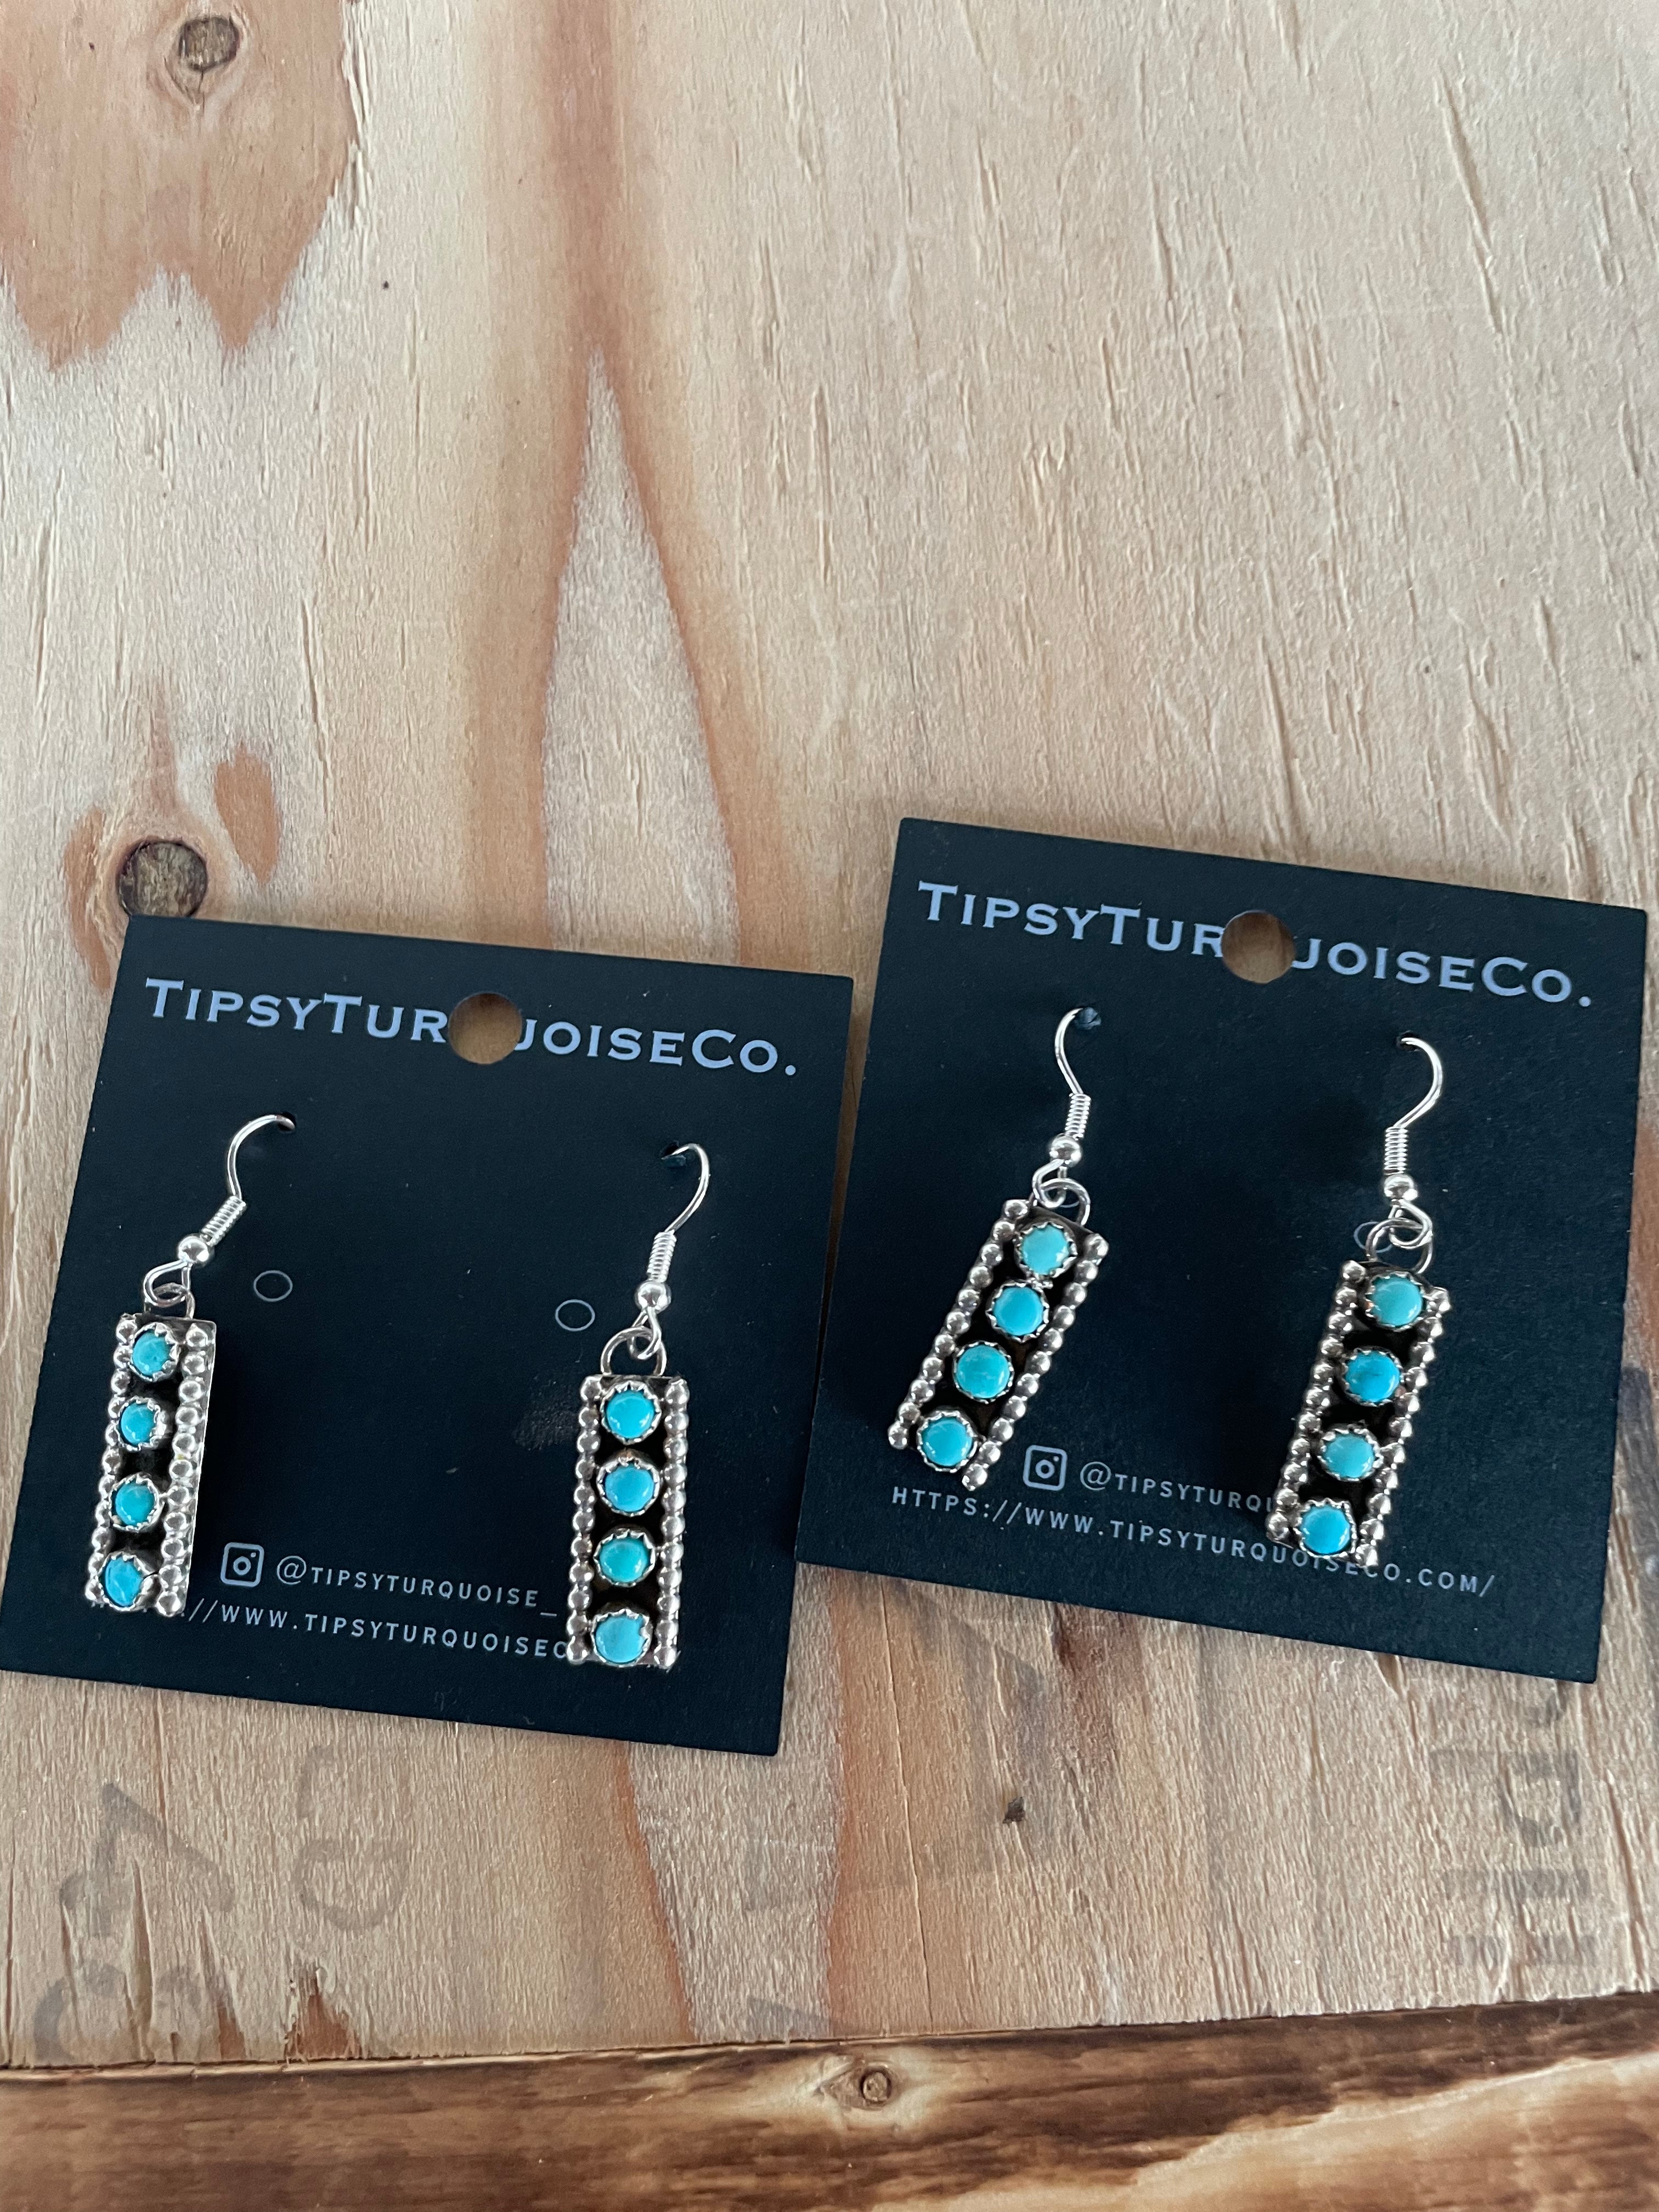 4 Turquoise Stone Rectangle Earrings